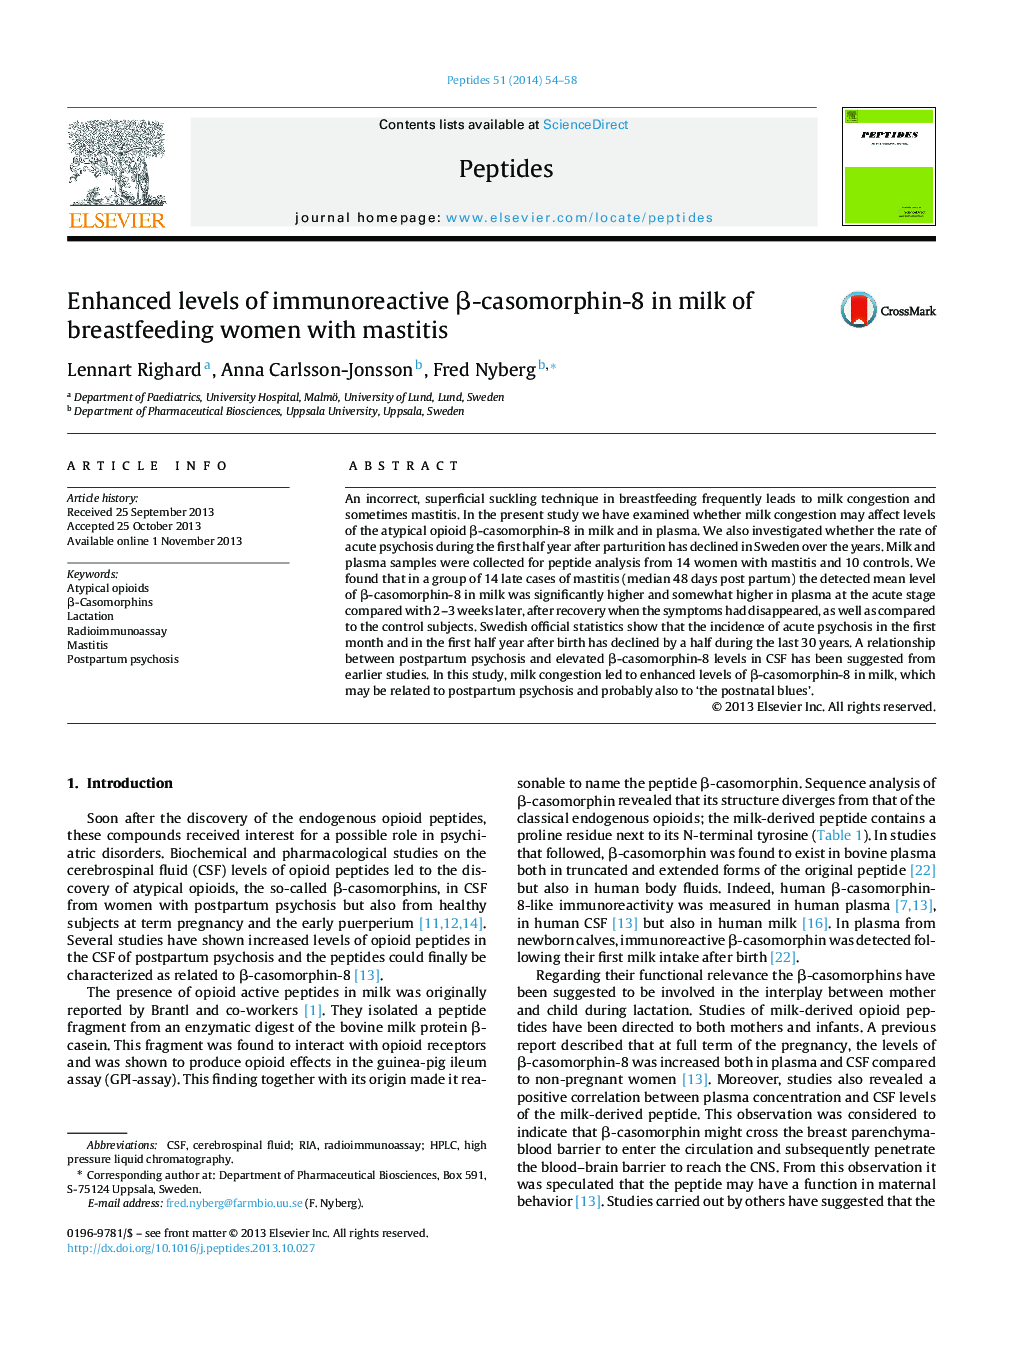 Enhanced levels of immunoreactive Î²-casomorphin-8 in milk of breastfeeding women with mastitis